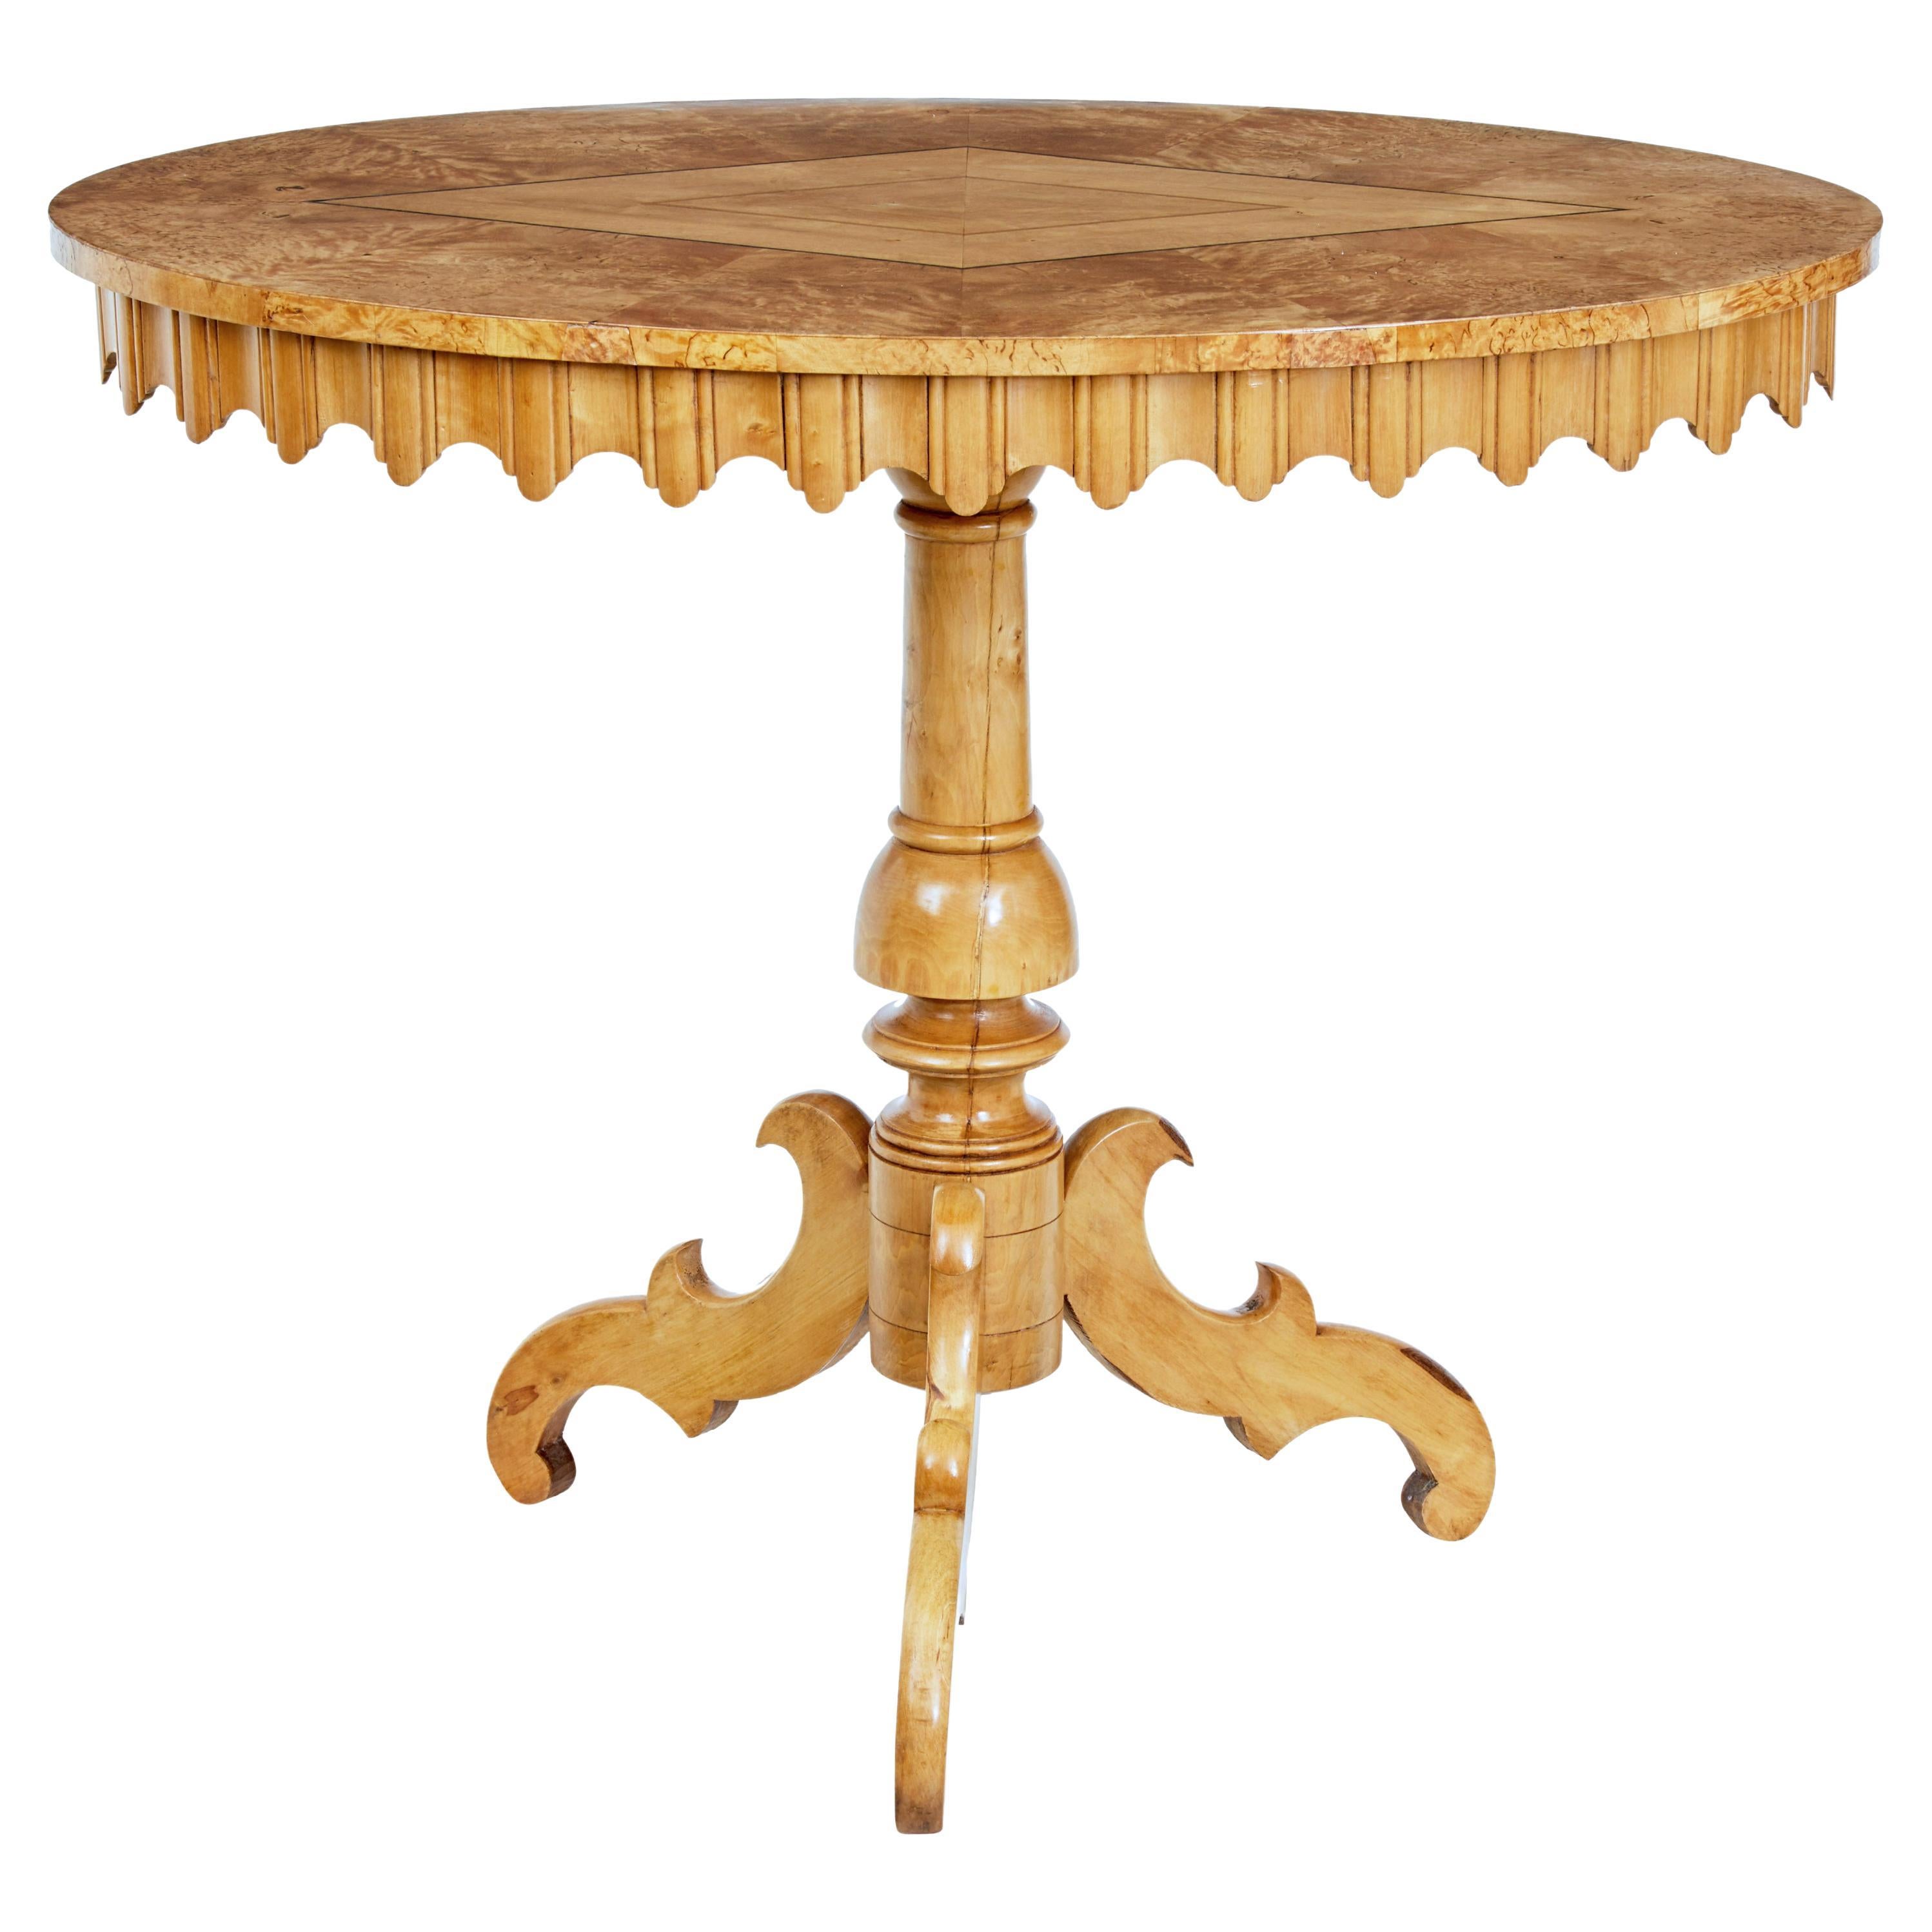 Swedish 1860s Birch Inlaid Occasional Pedestal Table with Diamond Motif